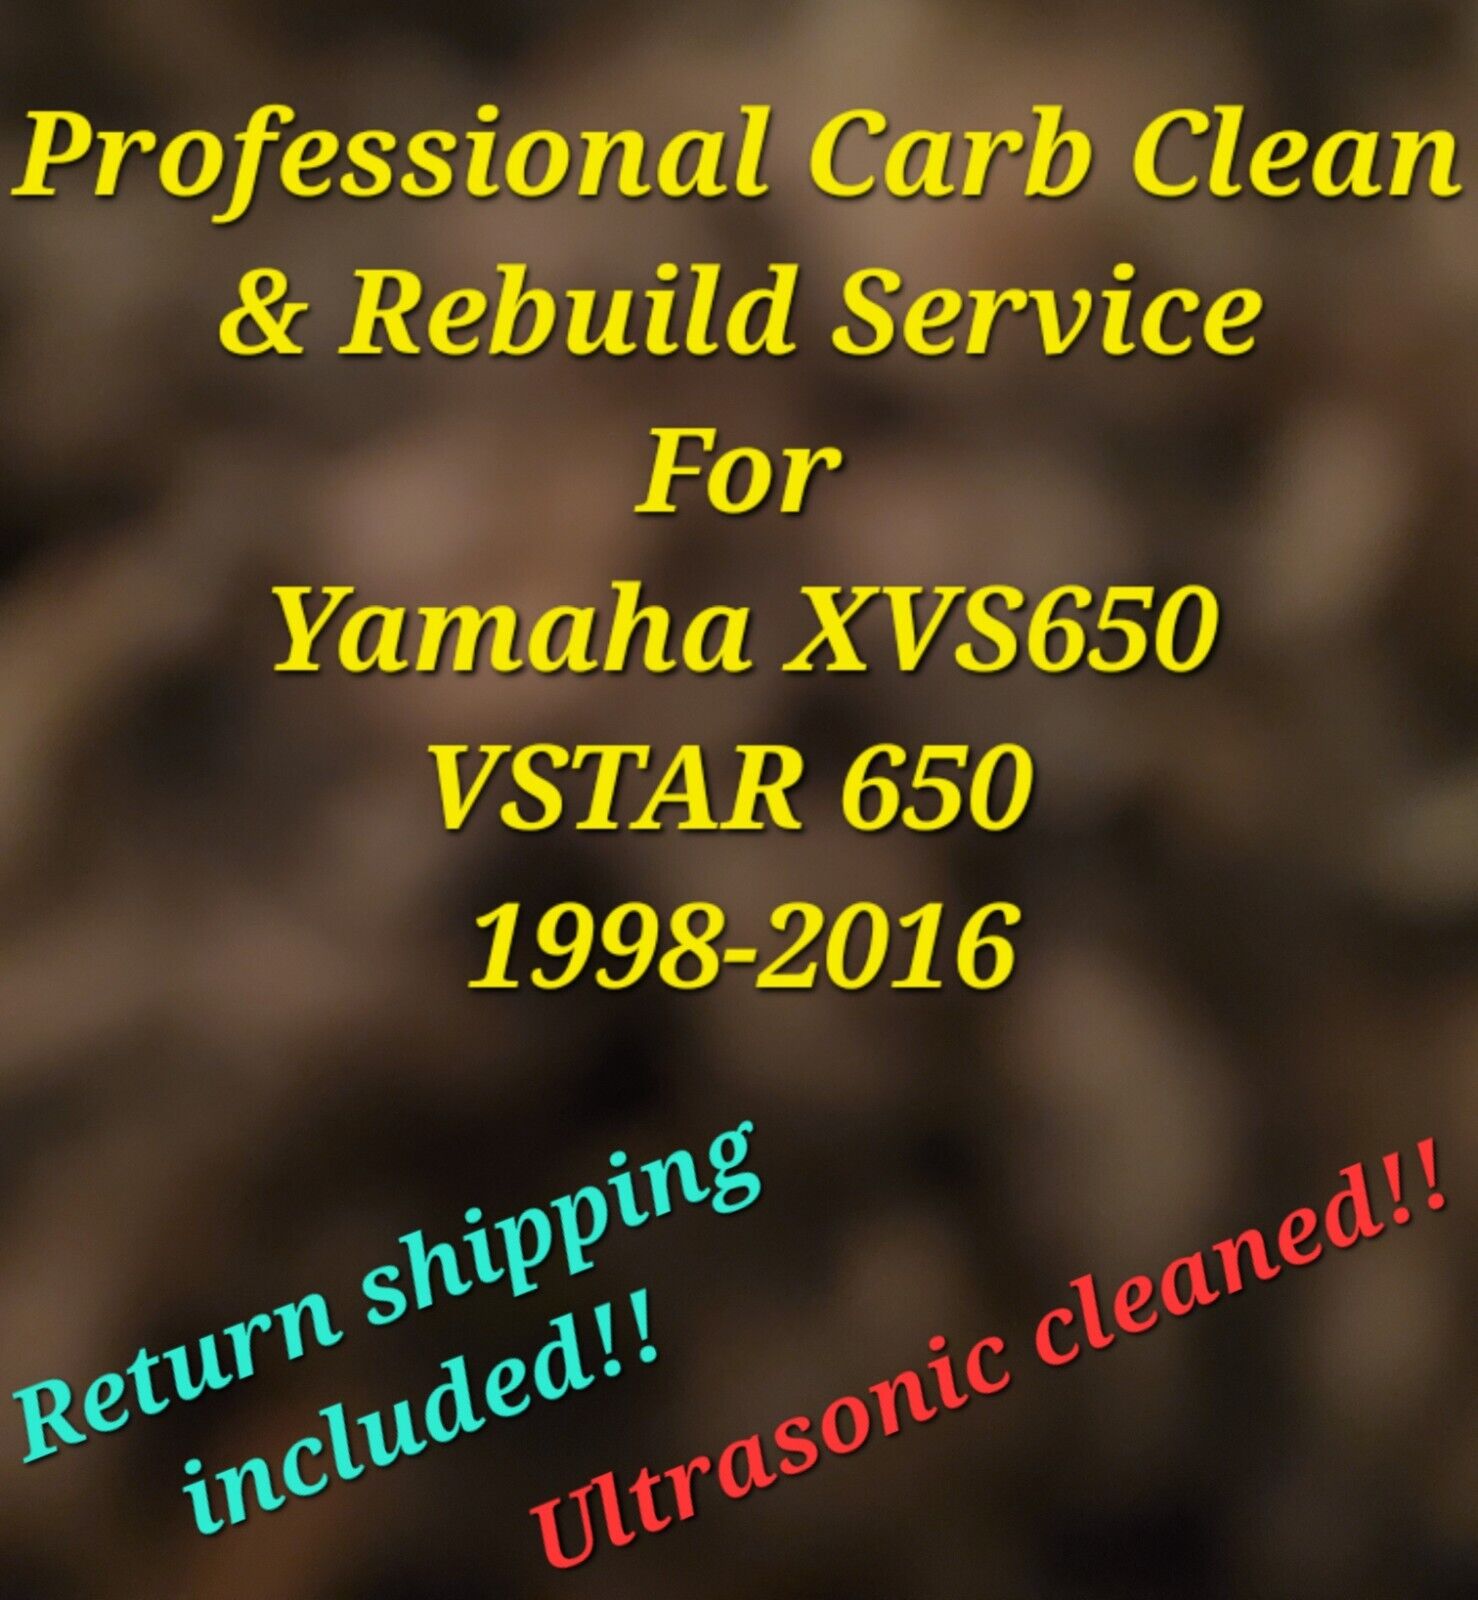 1998-2016 Yamaha VSTAR 650 Professional Carb Clean & Rebuild Service XVS650